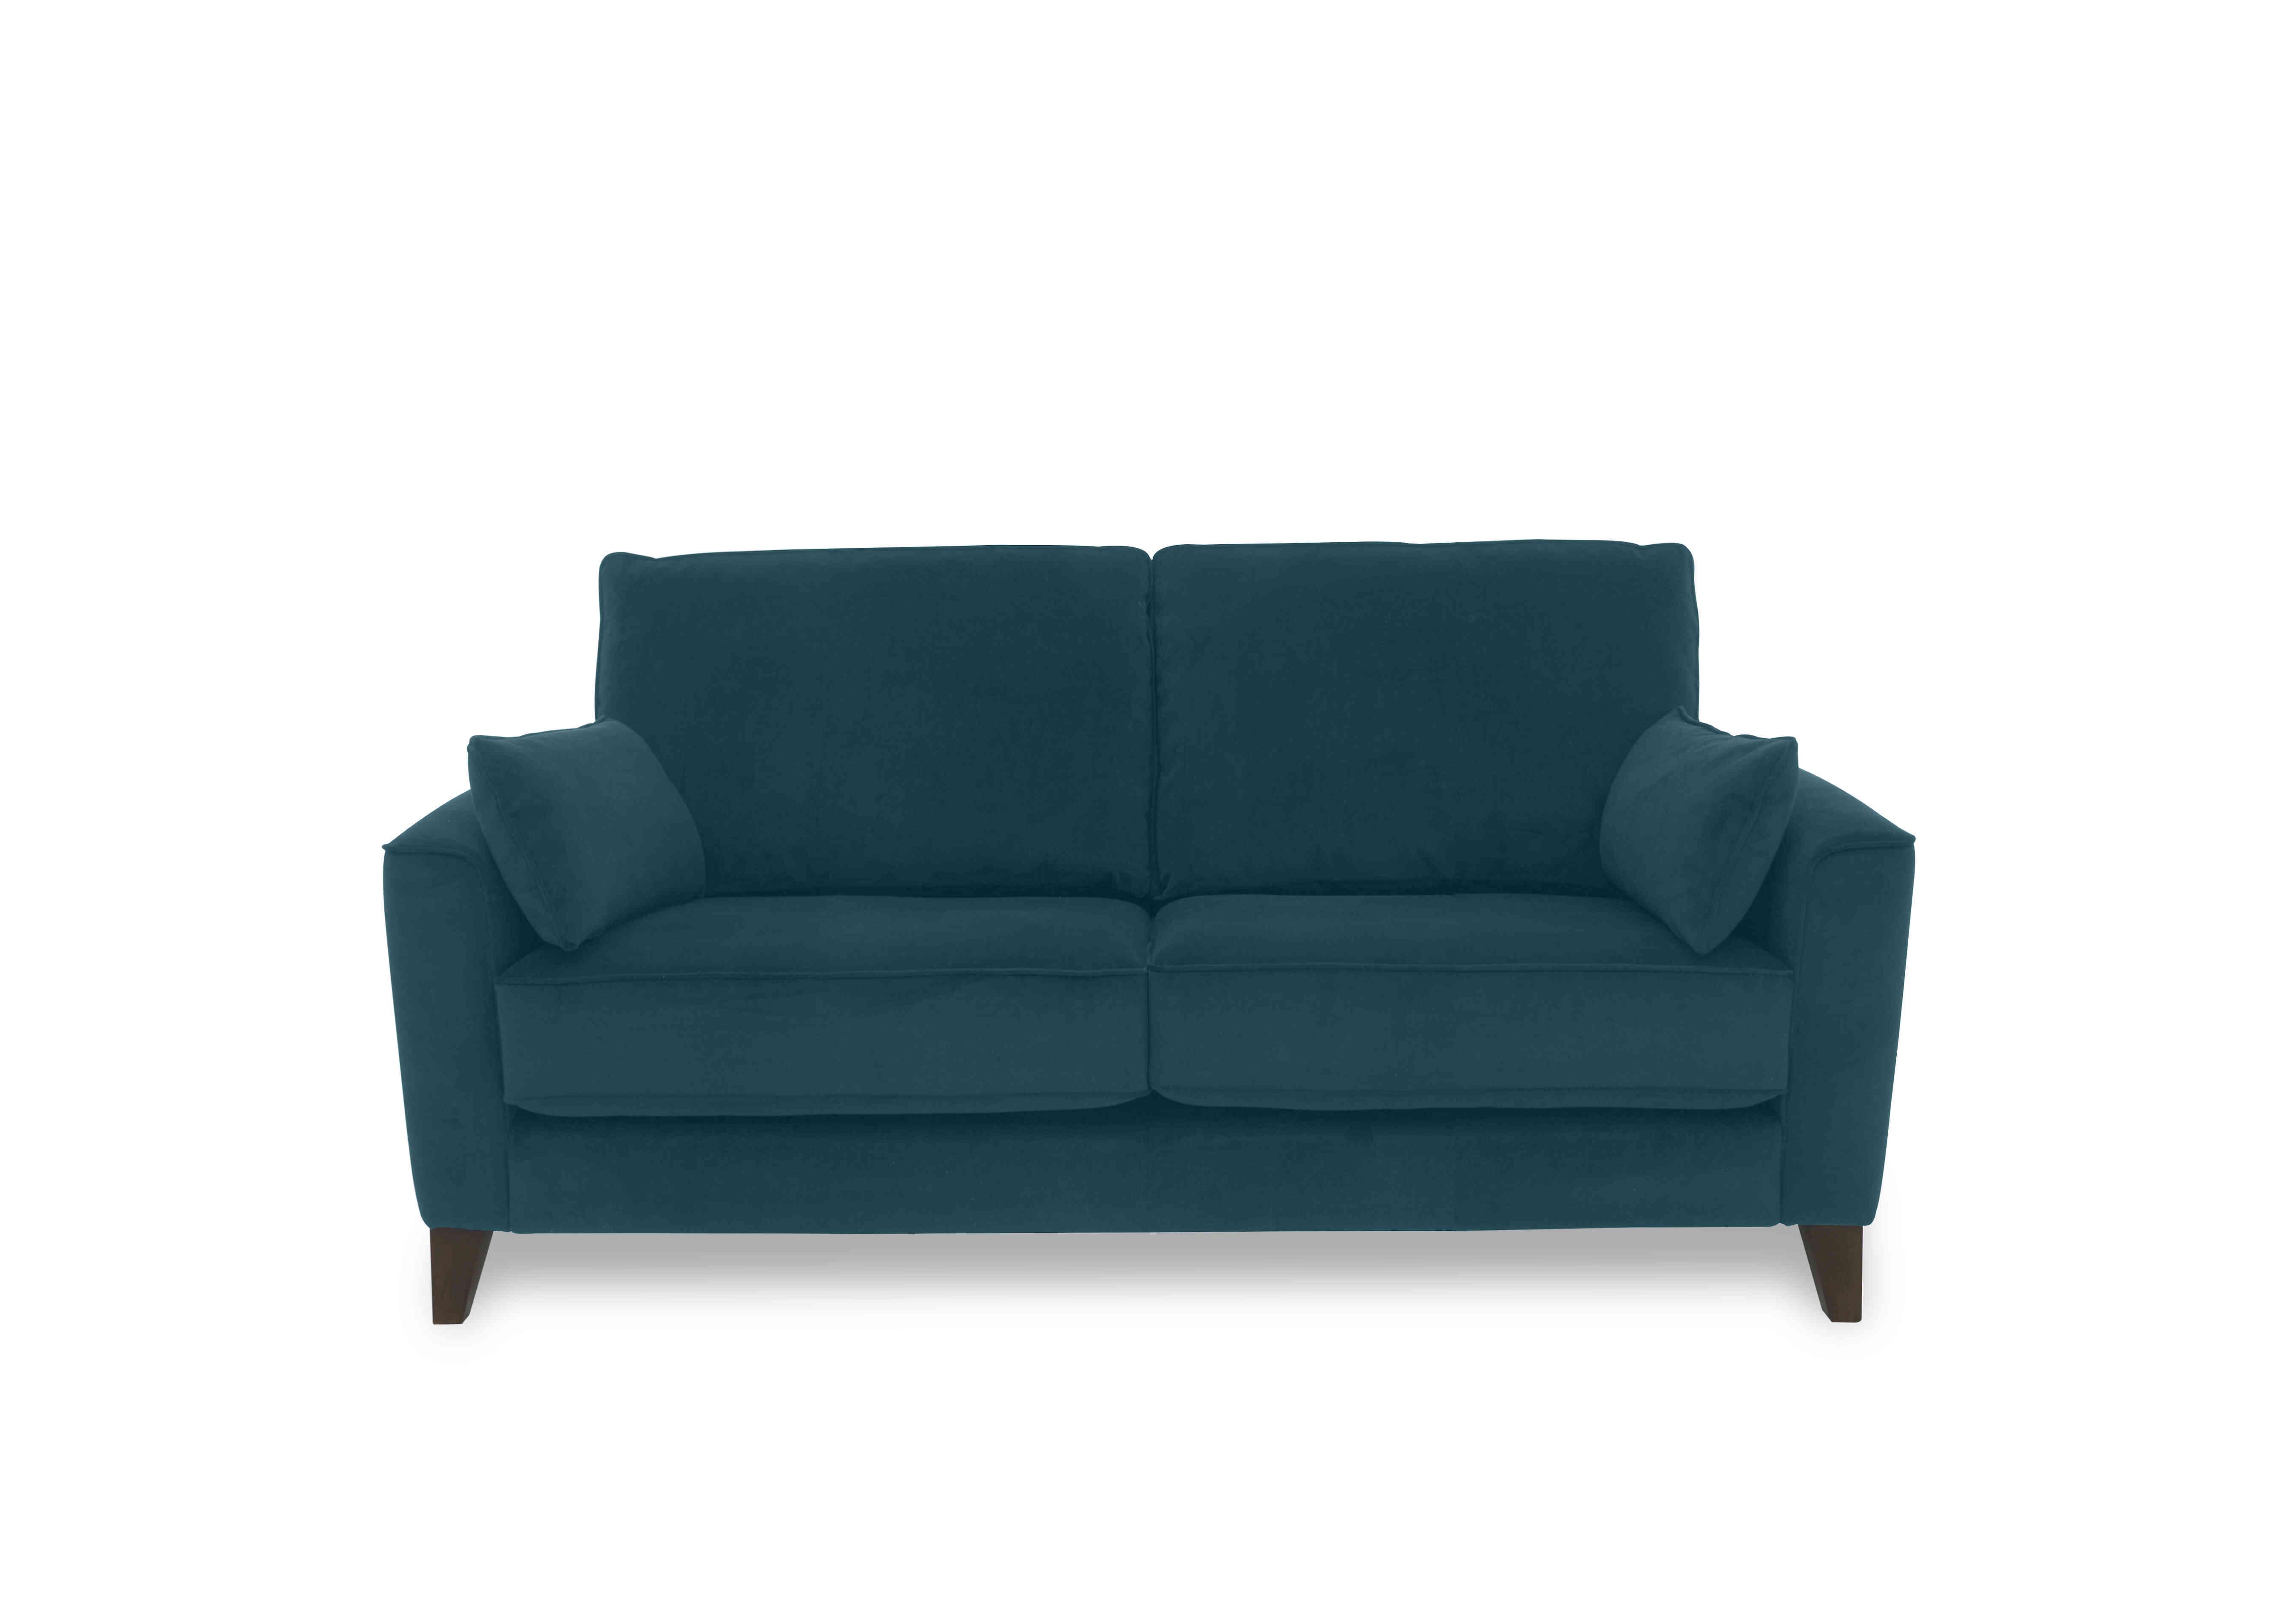 Brondby 2 Seater Fabric Sofa in Fab-Meg-R36 Lake Green on Furniture Village